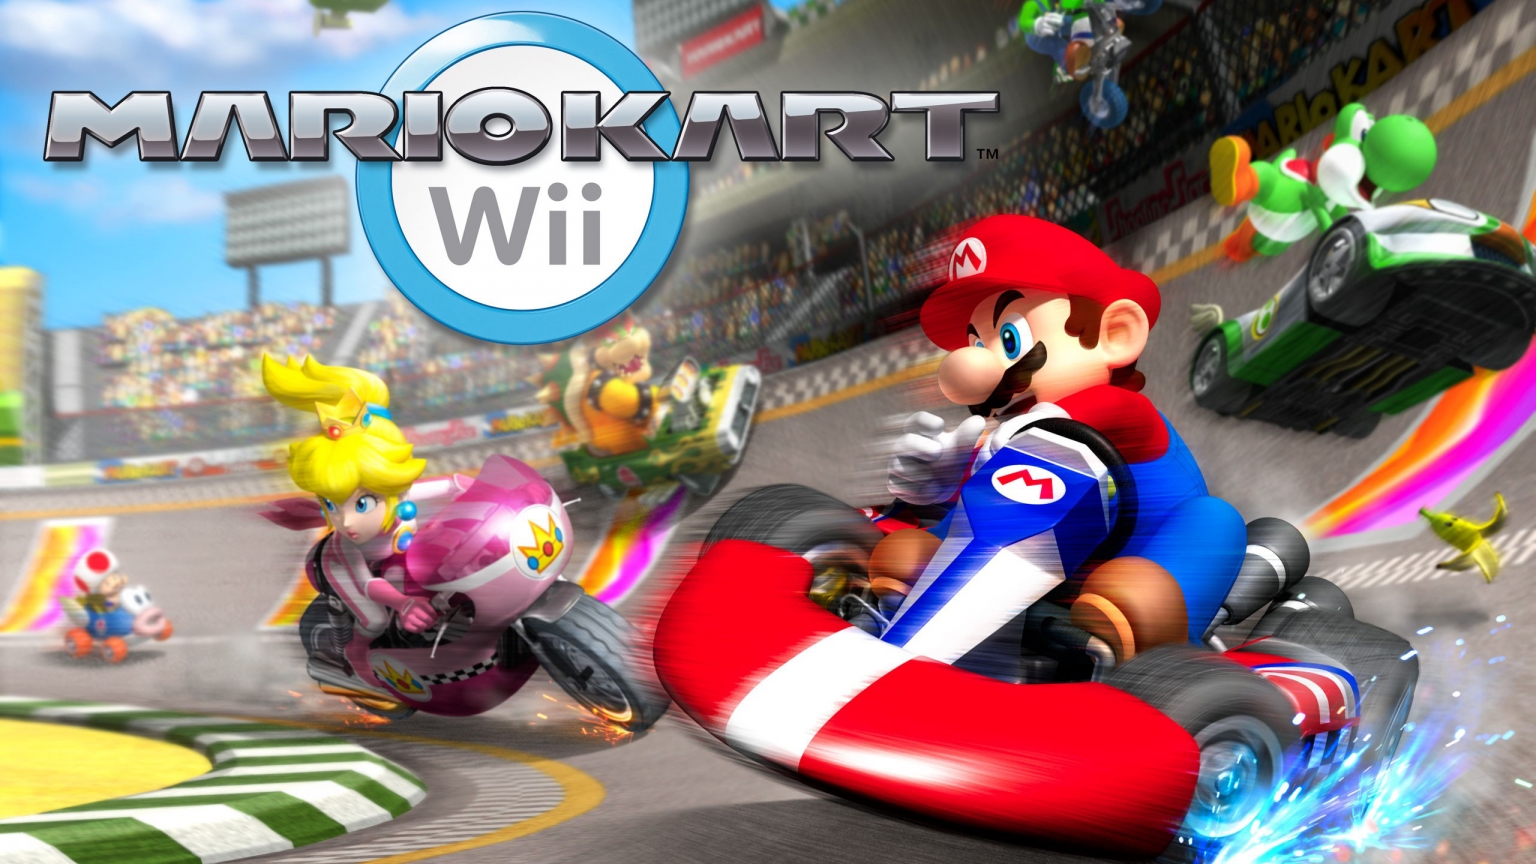 Mario Kart Wii for 1536 x 864 HDTV resolution